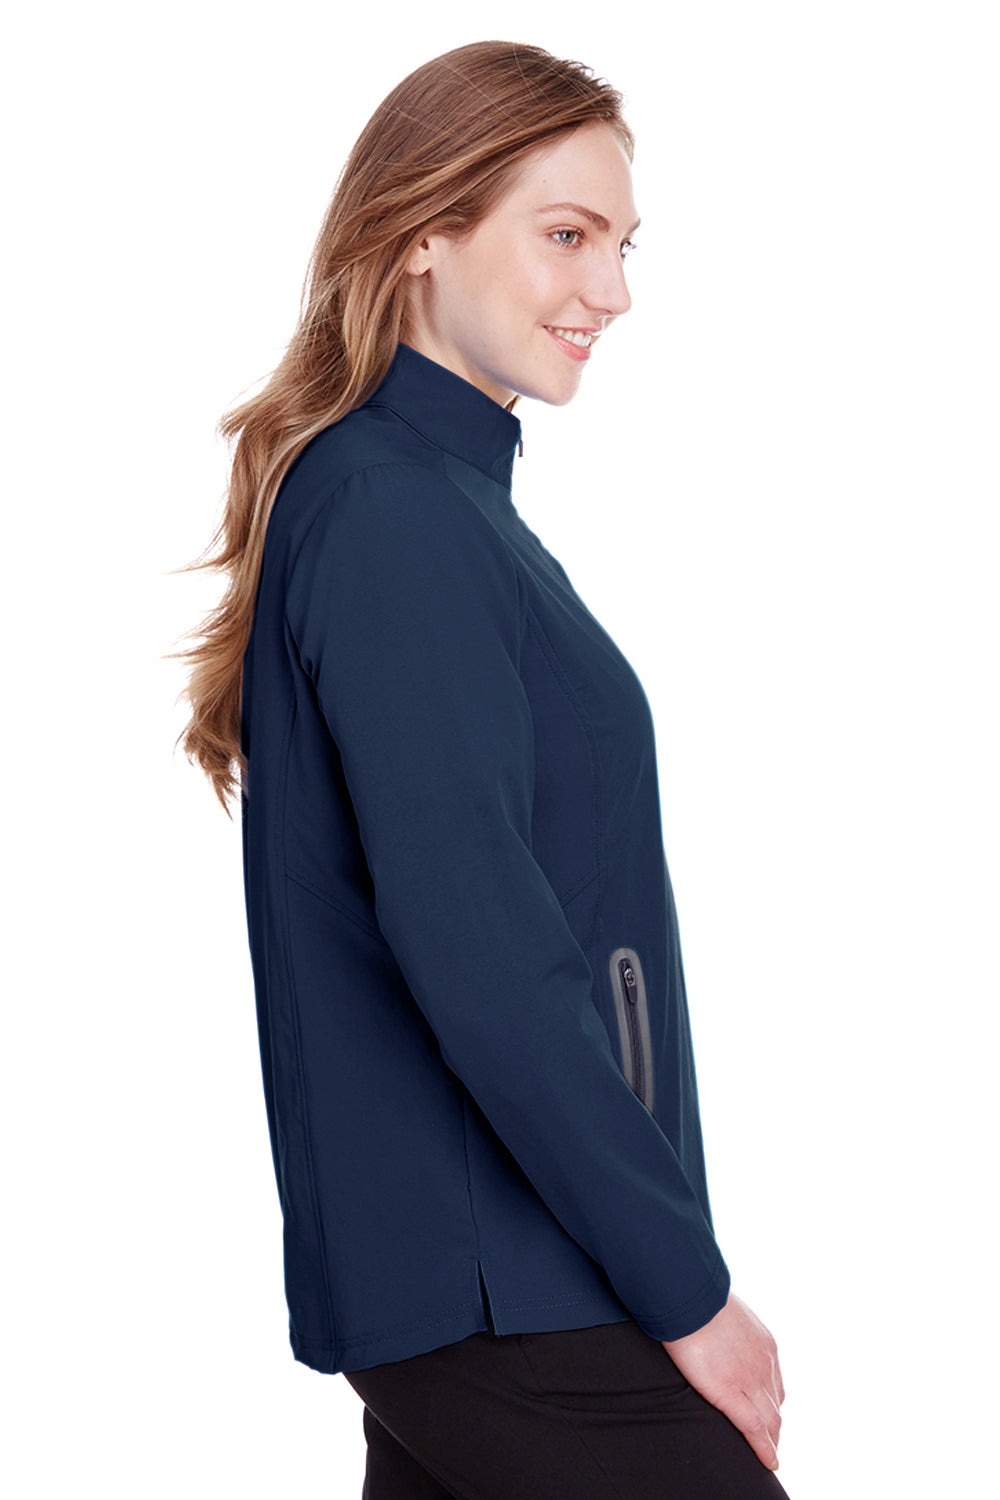 North End NE401W Womens Quest Performance Moisture Wicking 1/4 Zip Sweatshirt Navy Blue/Carbon Grey Side